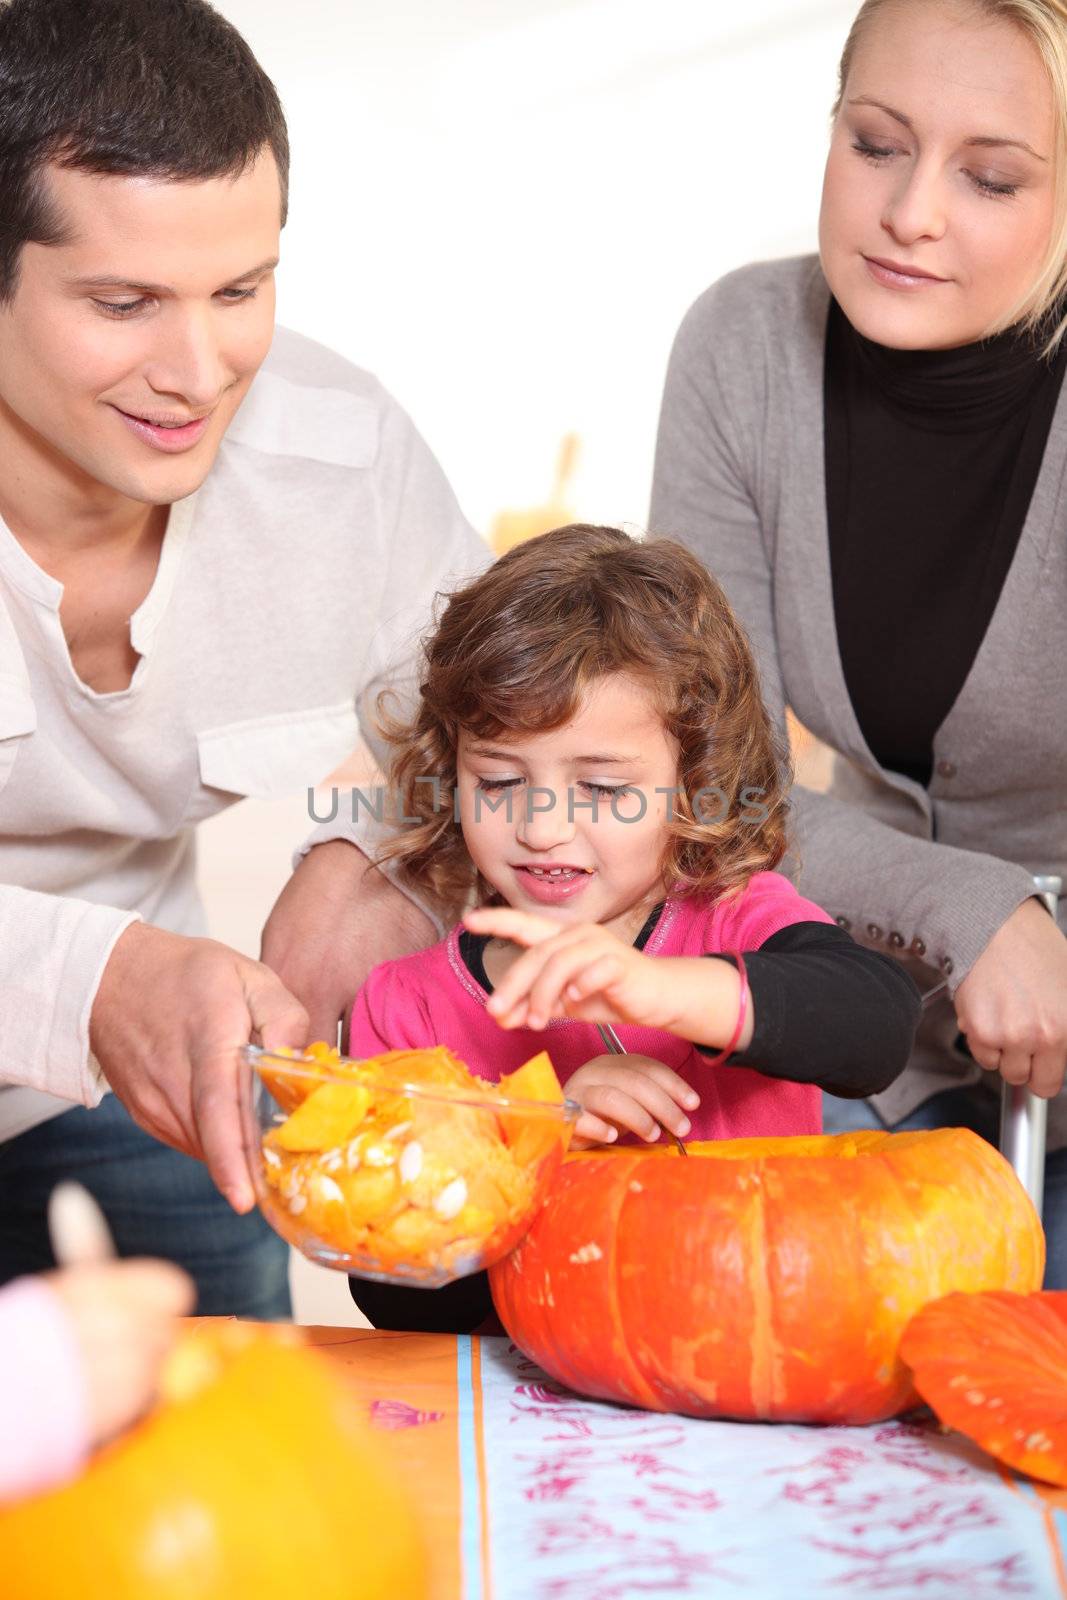 Family carving hallowe'en pumpkin by phovoir